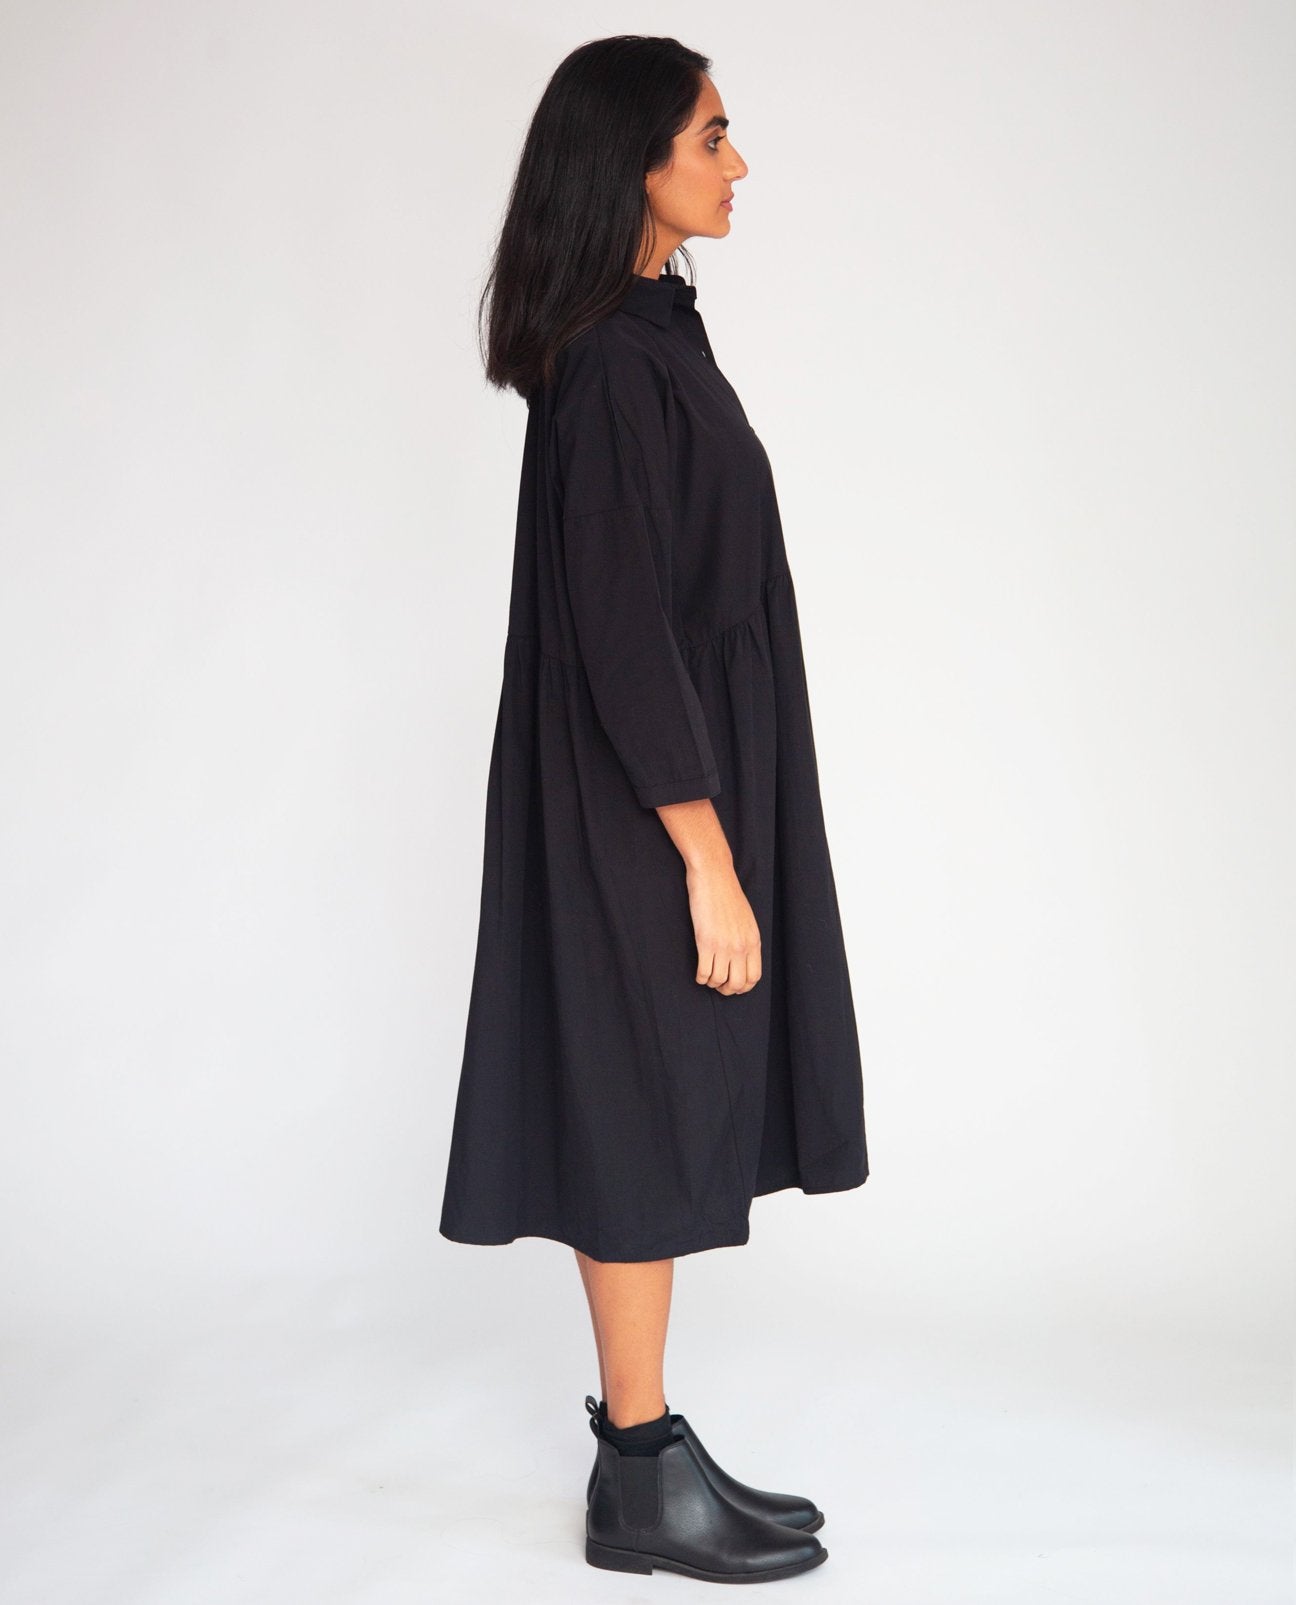 Marge Organic Cotton Dress - black